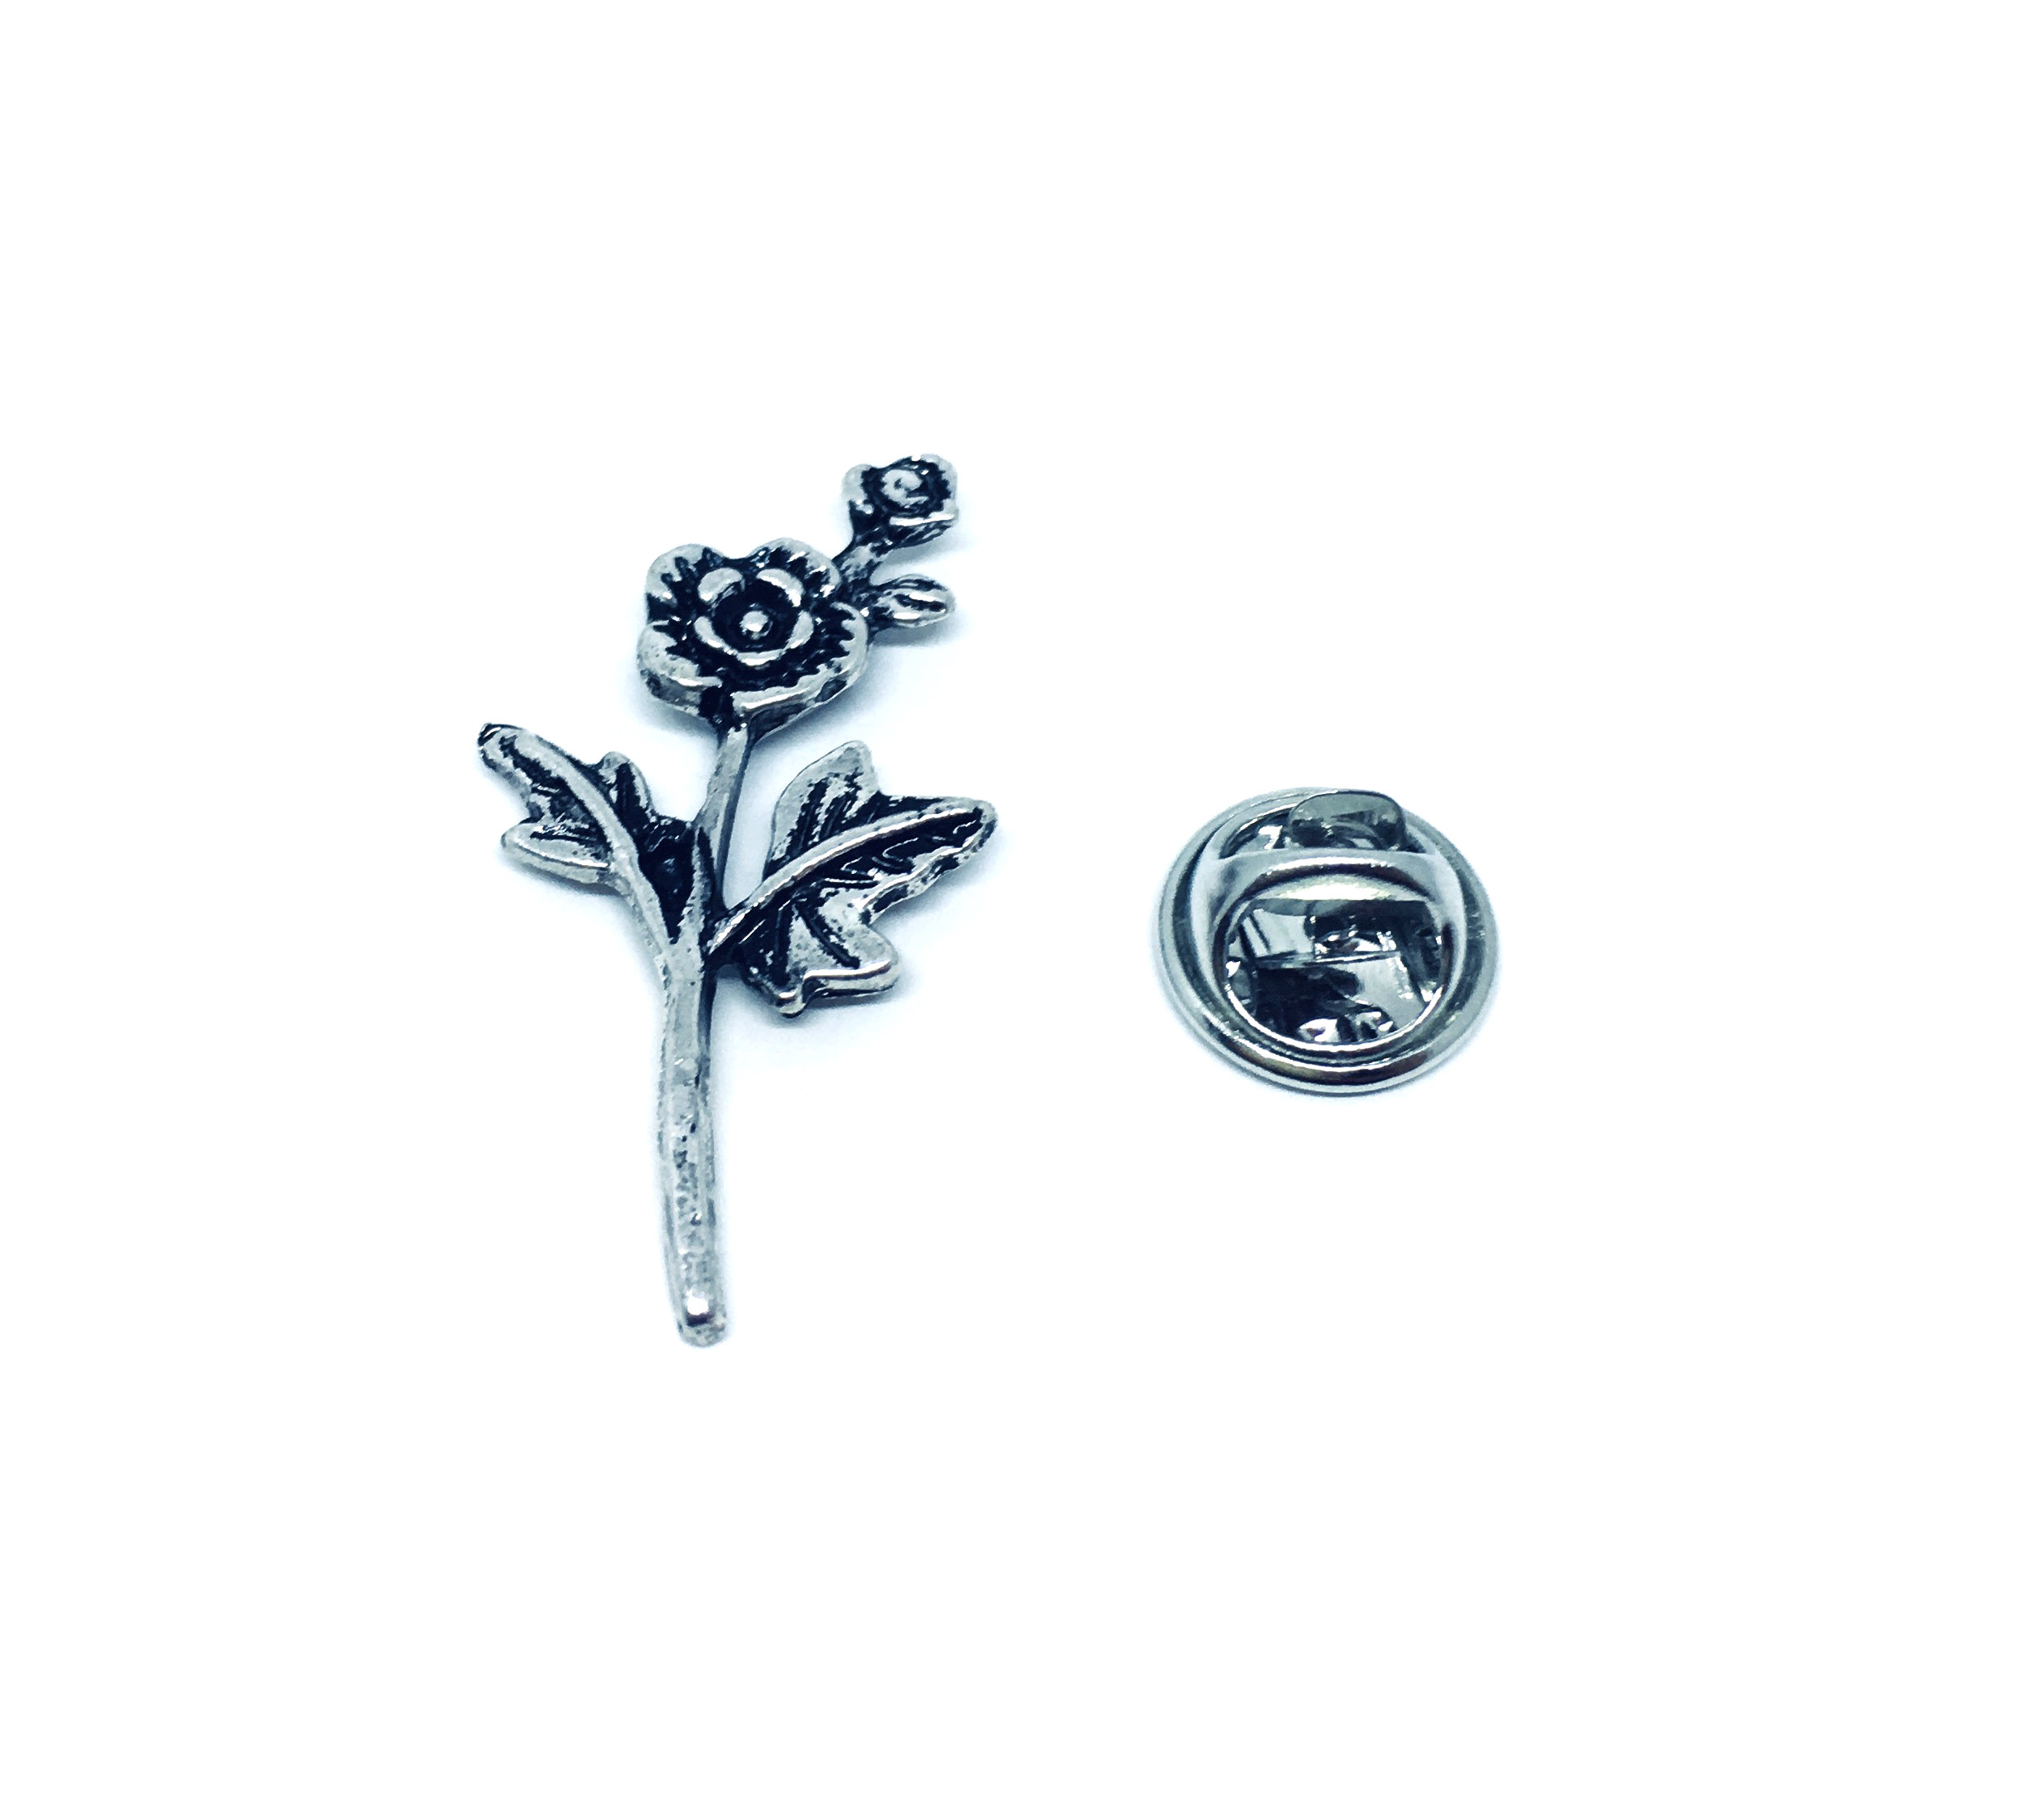 Antique Rose Pin